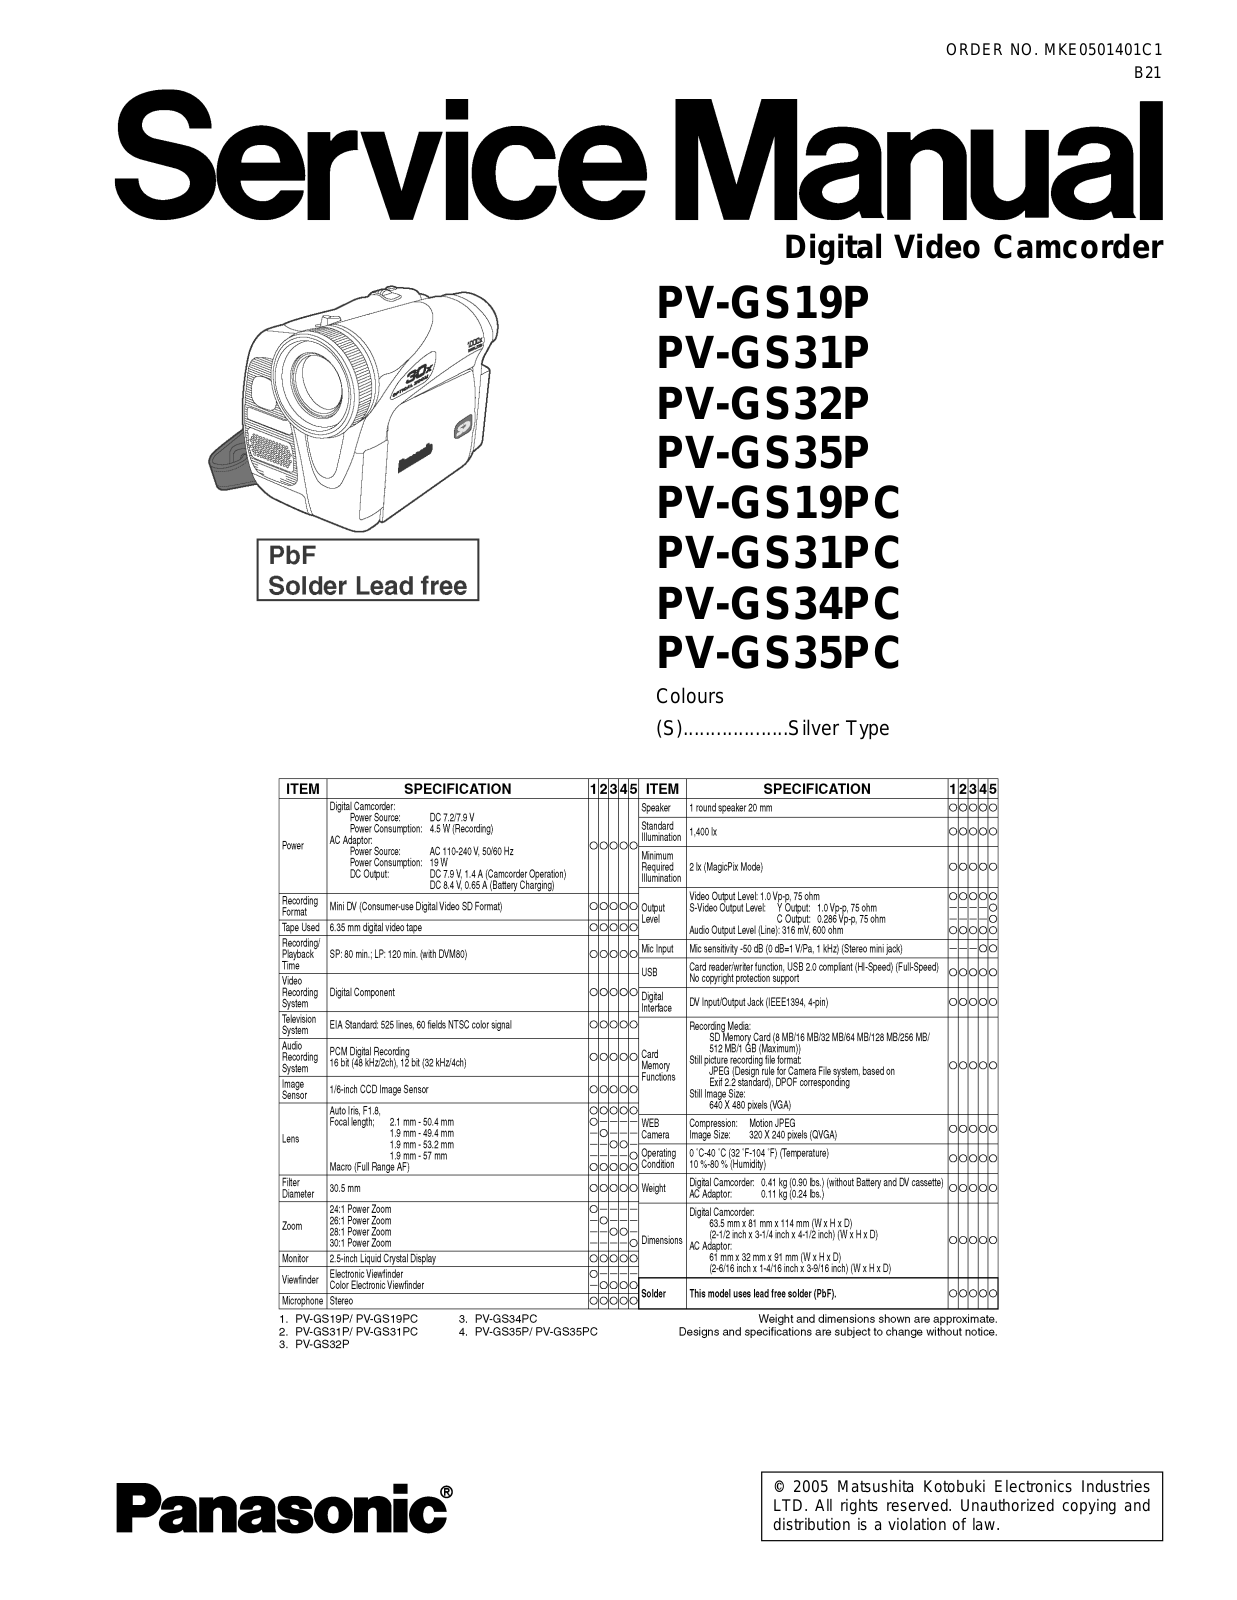 Panasonic PV-GS19P, PV-GS31P, PV-GS32P, PV-GS35P, PV-GS19PC Service Manual